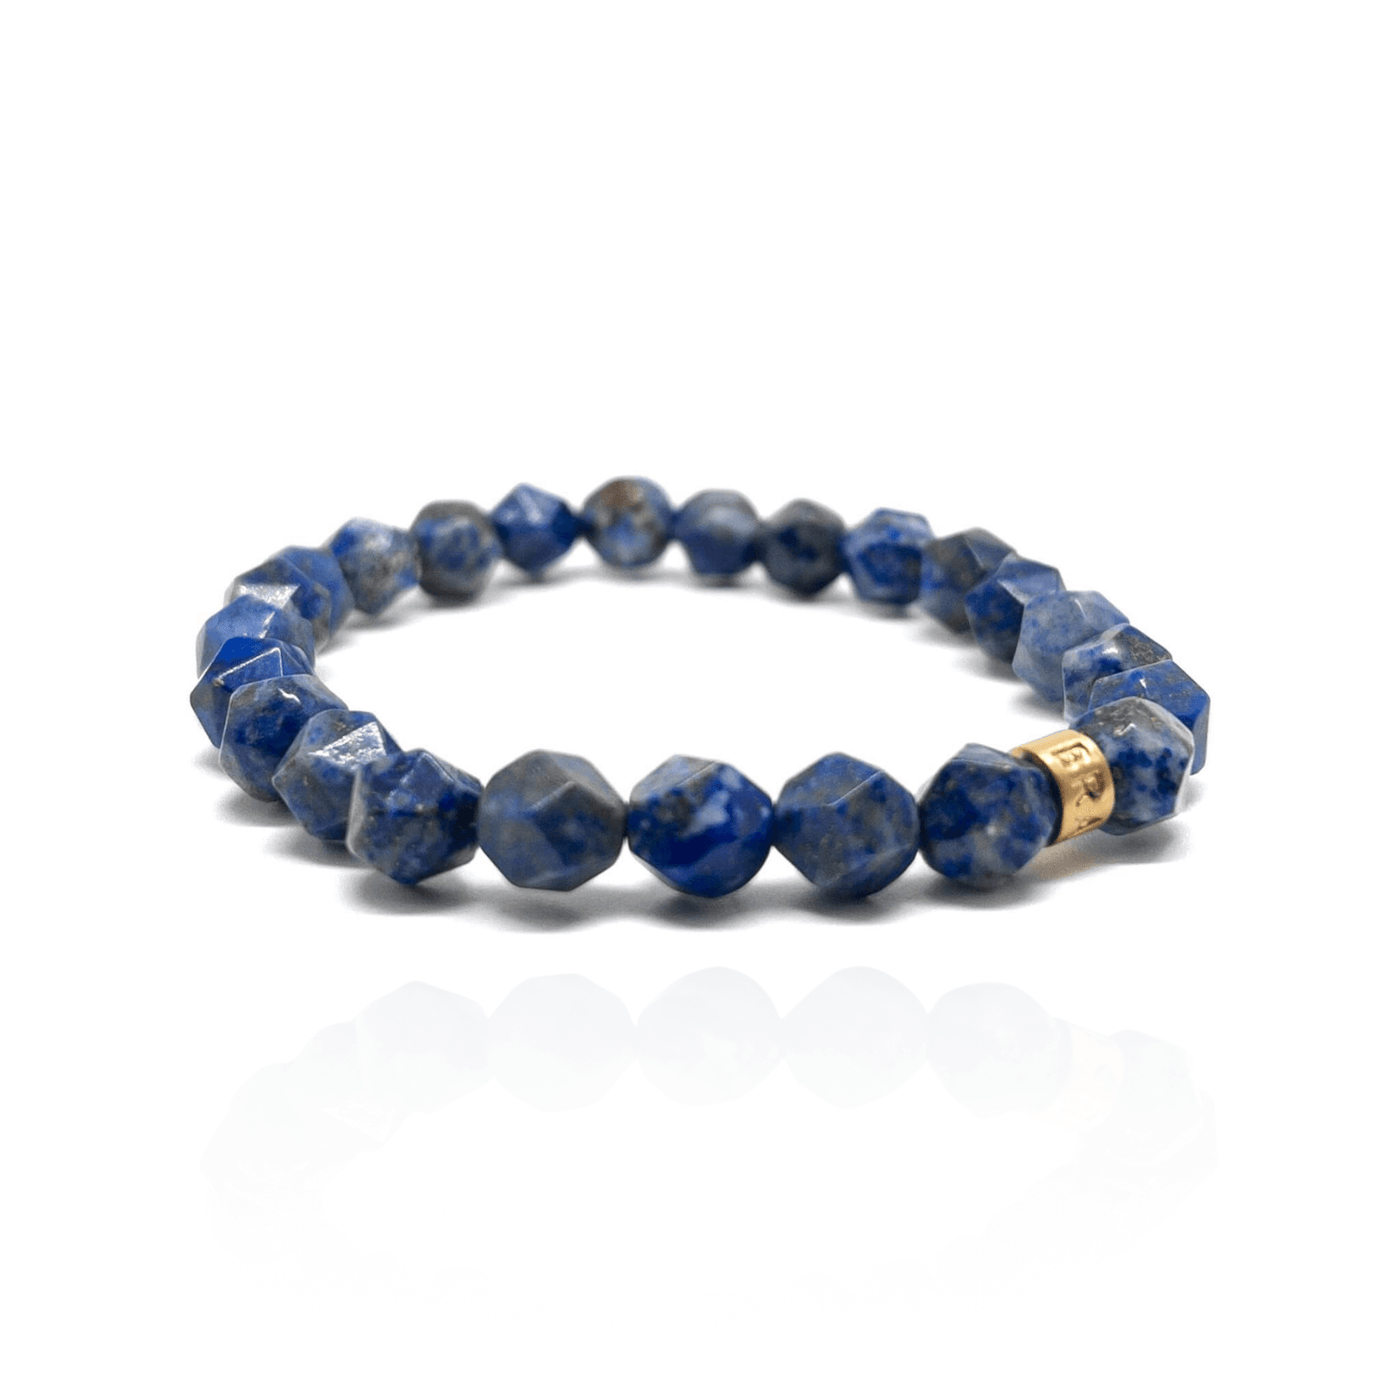 The Full Faceted Lapis Lazuli Signed Bracelet